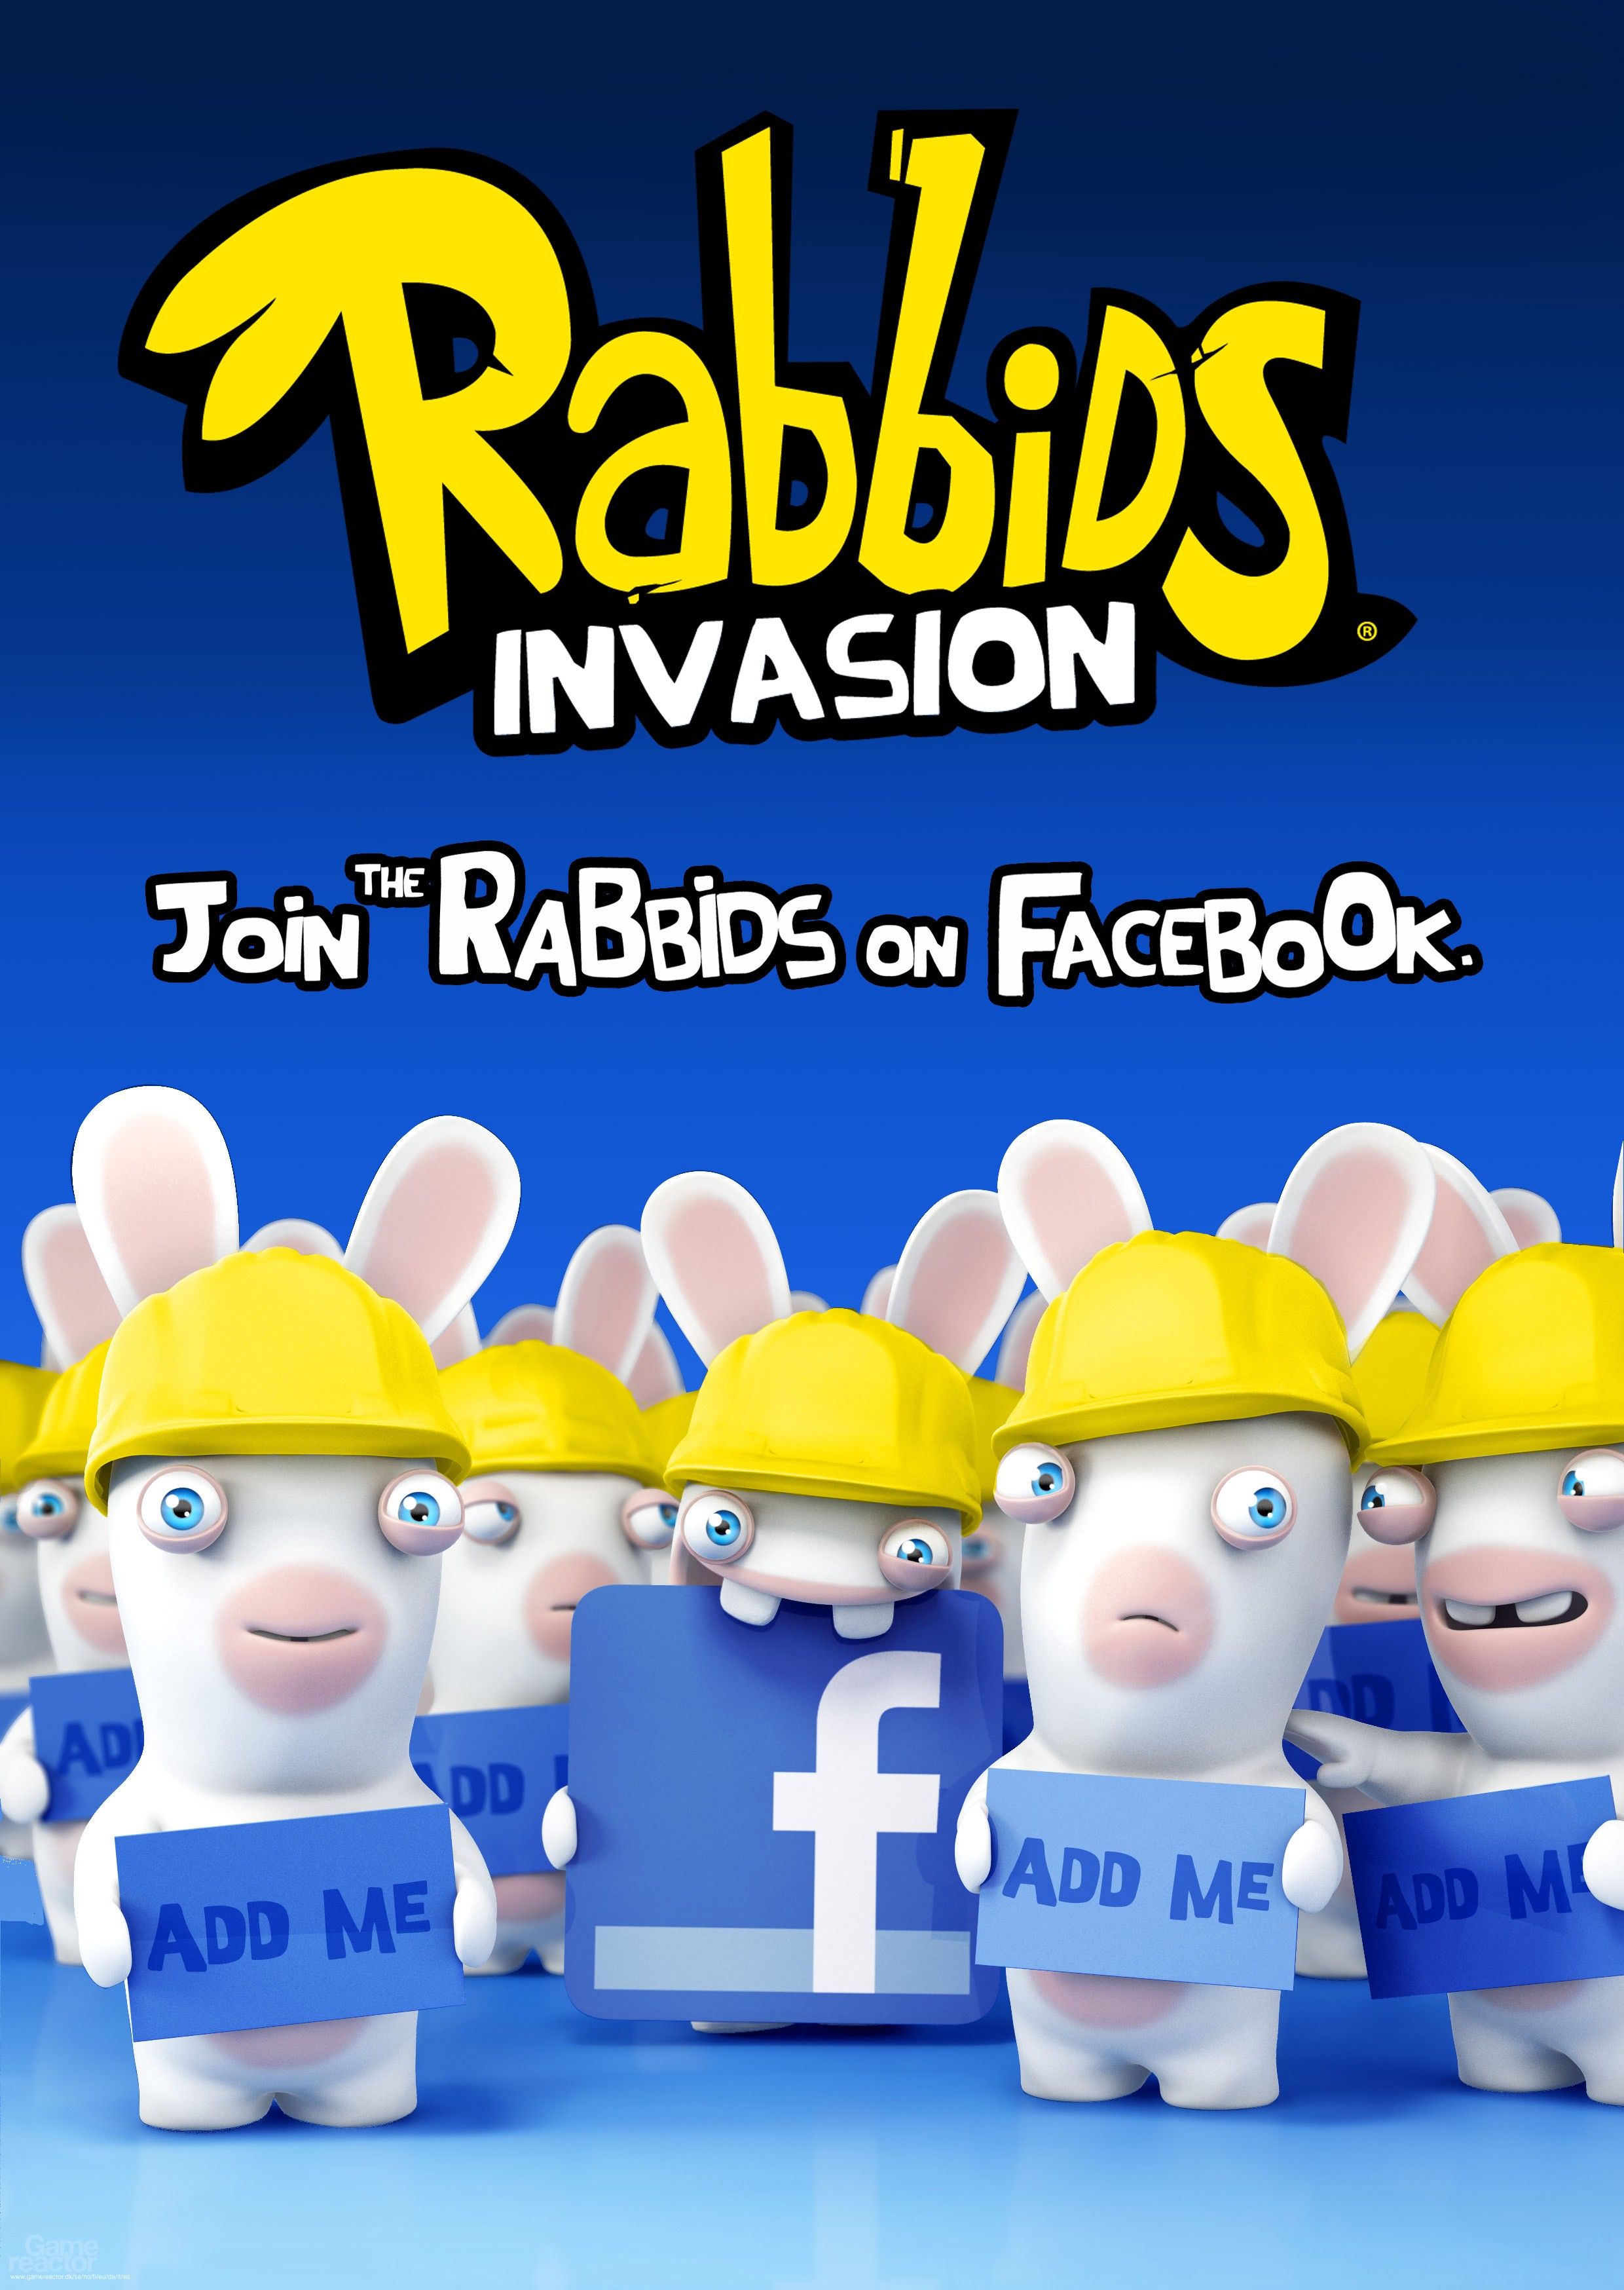 Rabbids invade Facebook Invasion: The Interactive TV